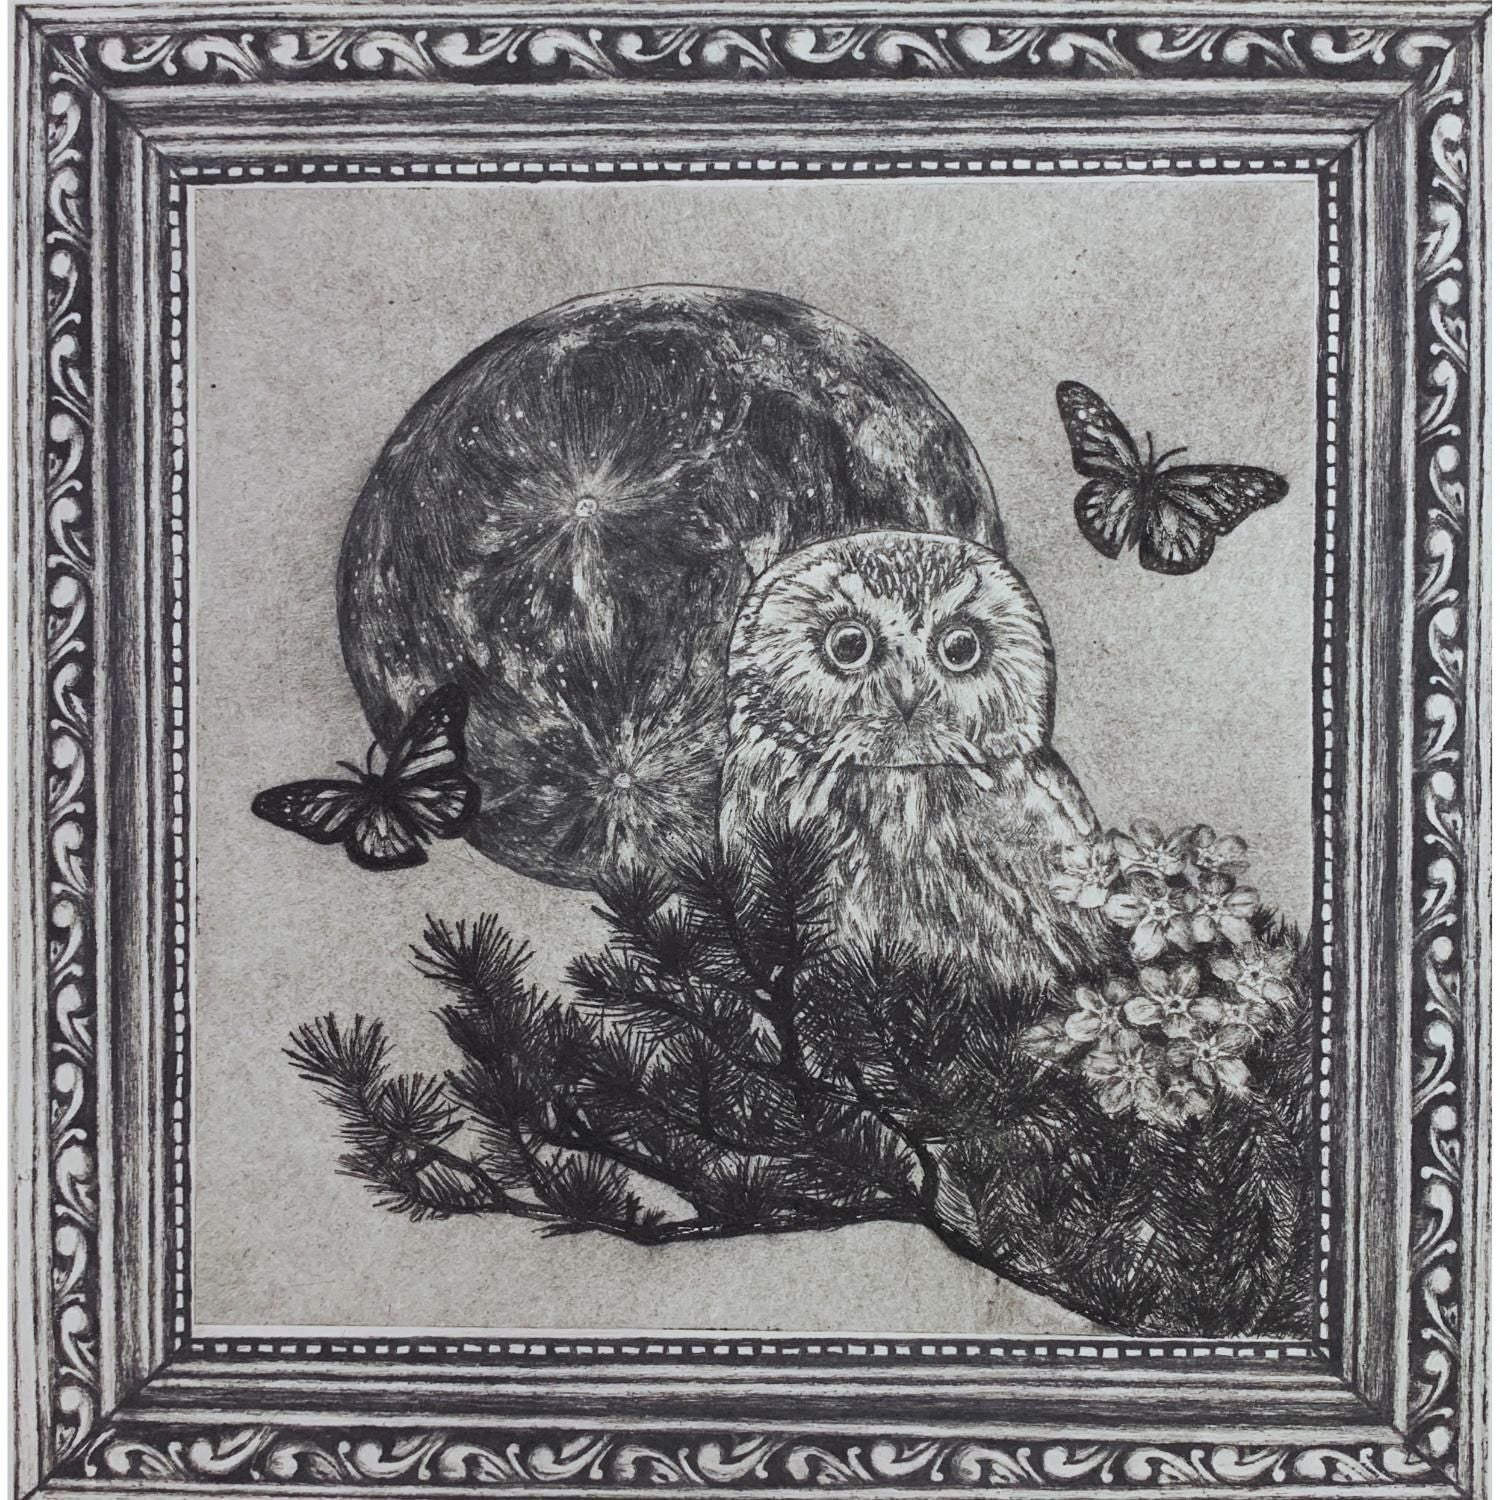 In The… (Owl) | Original Print by Tsubaki Scythe